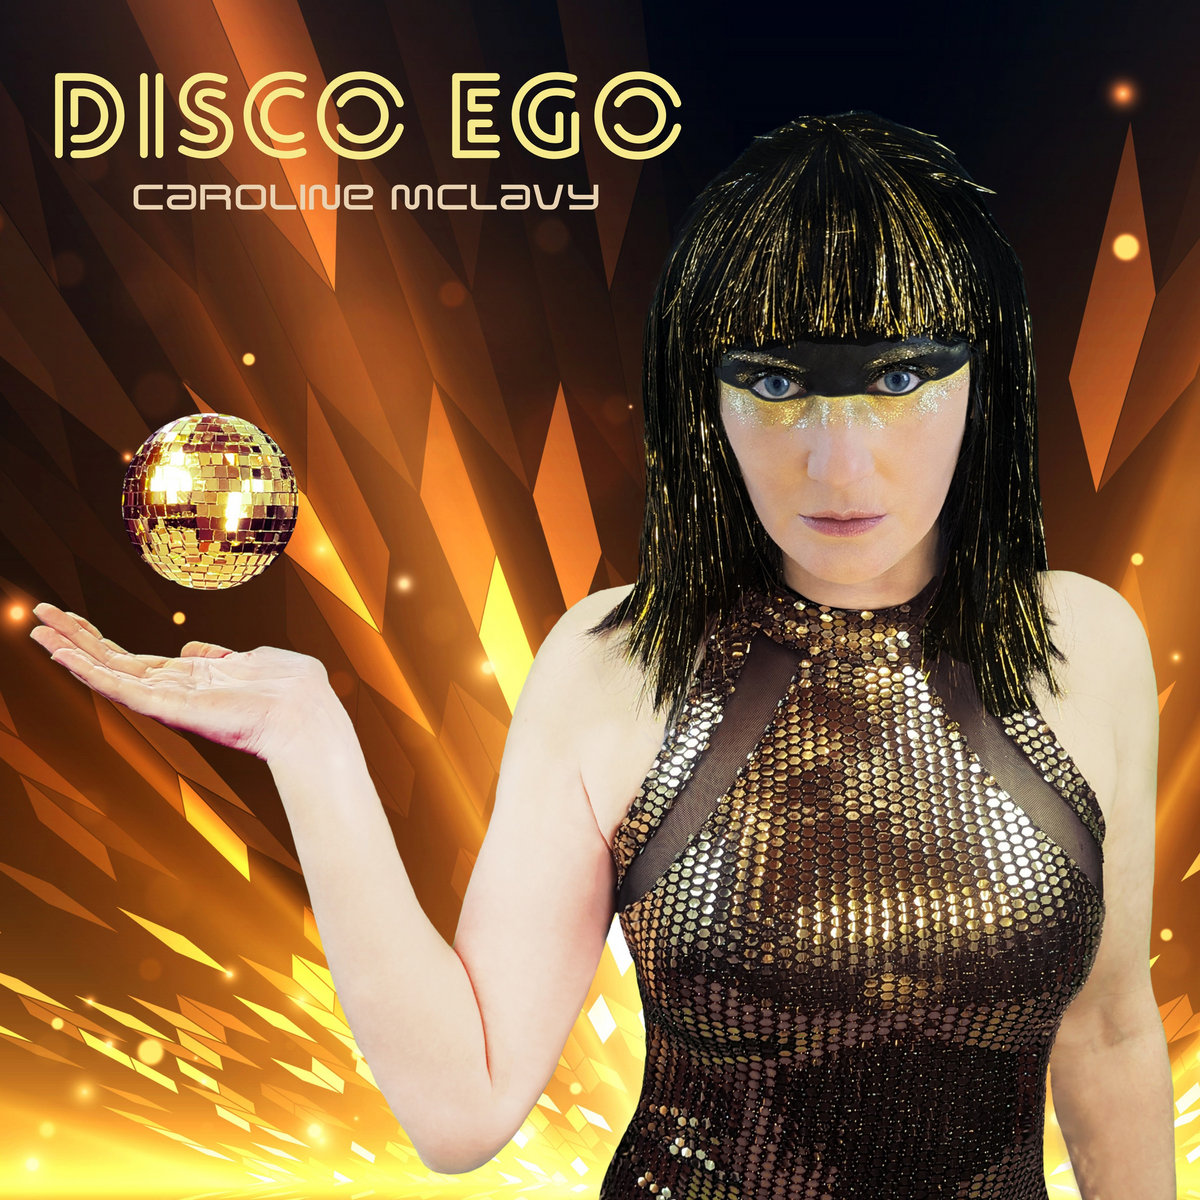 “Disco ego”